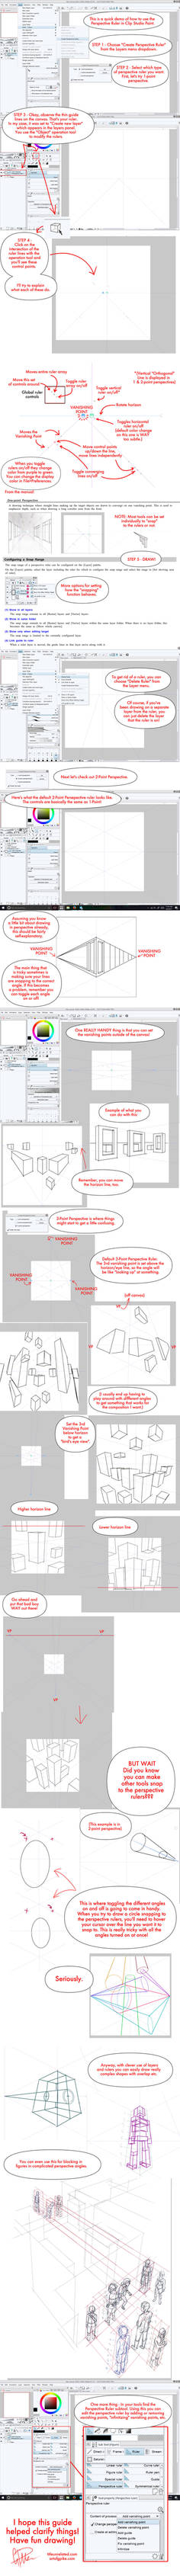 Clip Studio Paint Perspective Ruler Tutorial!